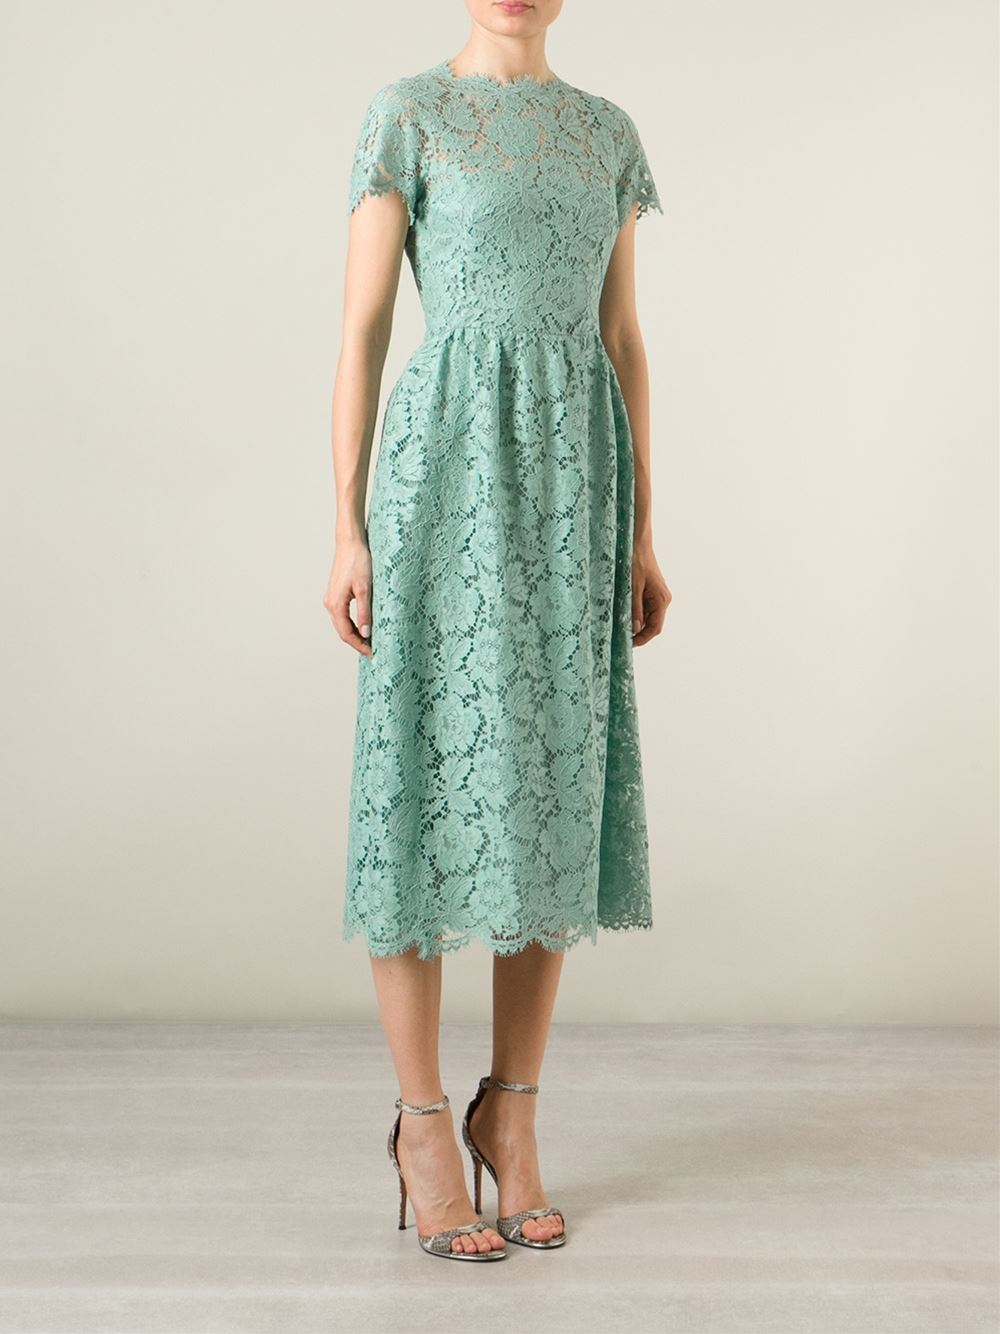 Pastel green long sleeve lace dress at Kiki's Stocksale